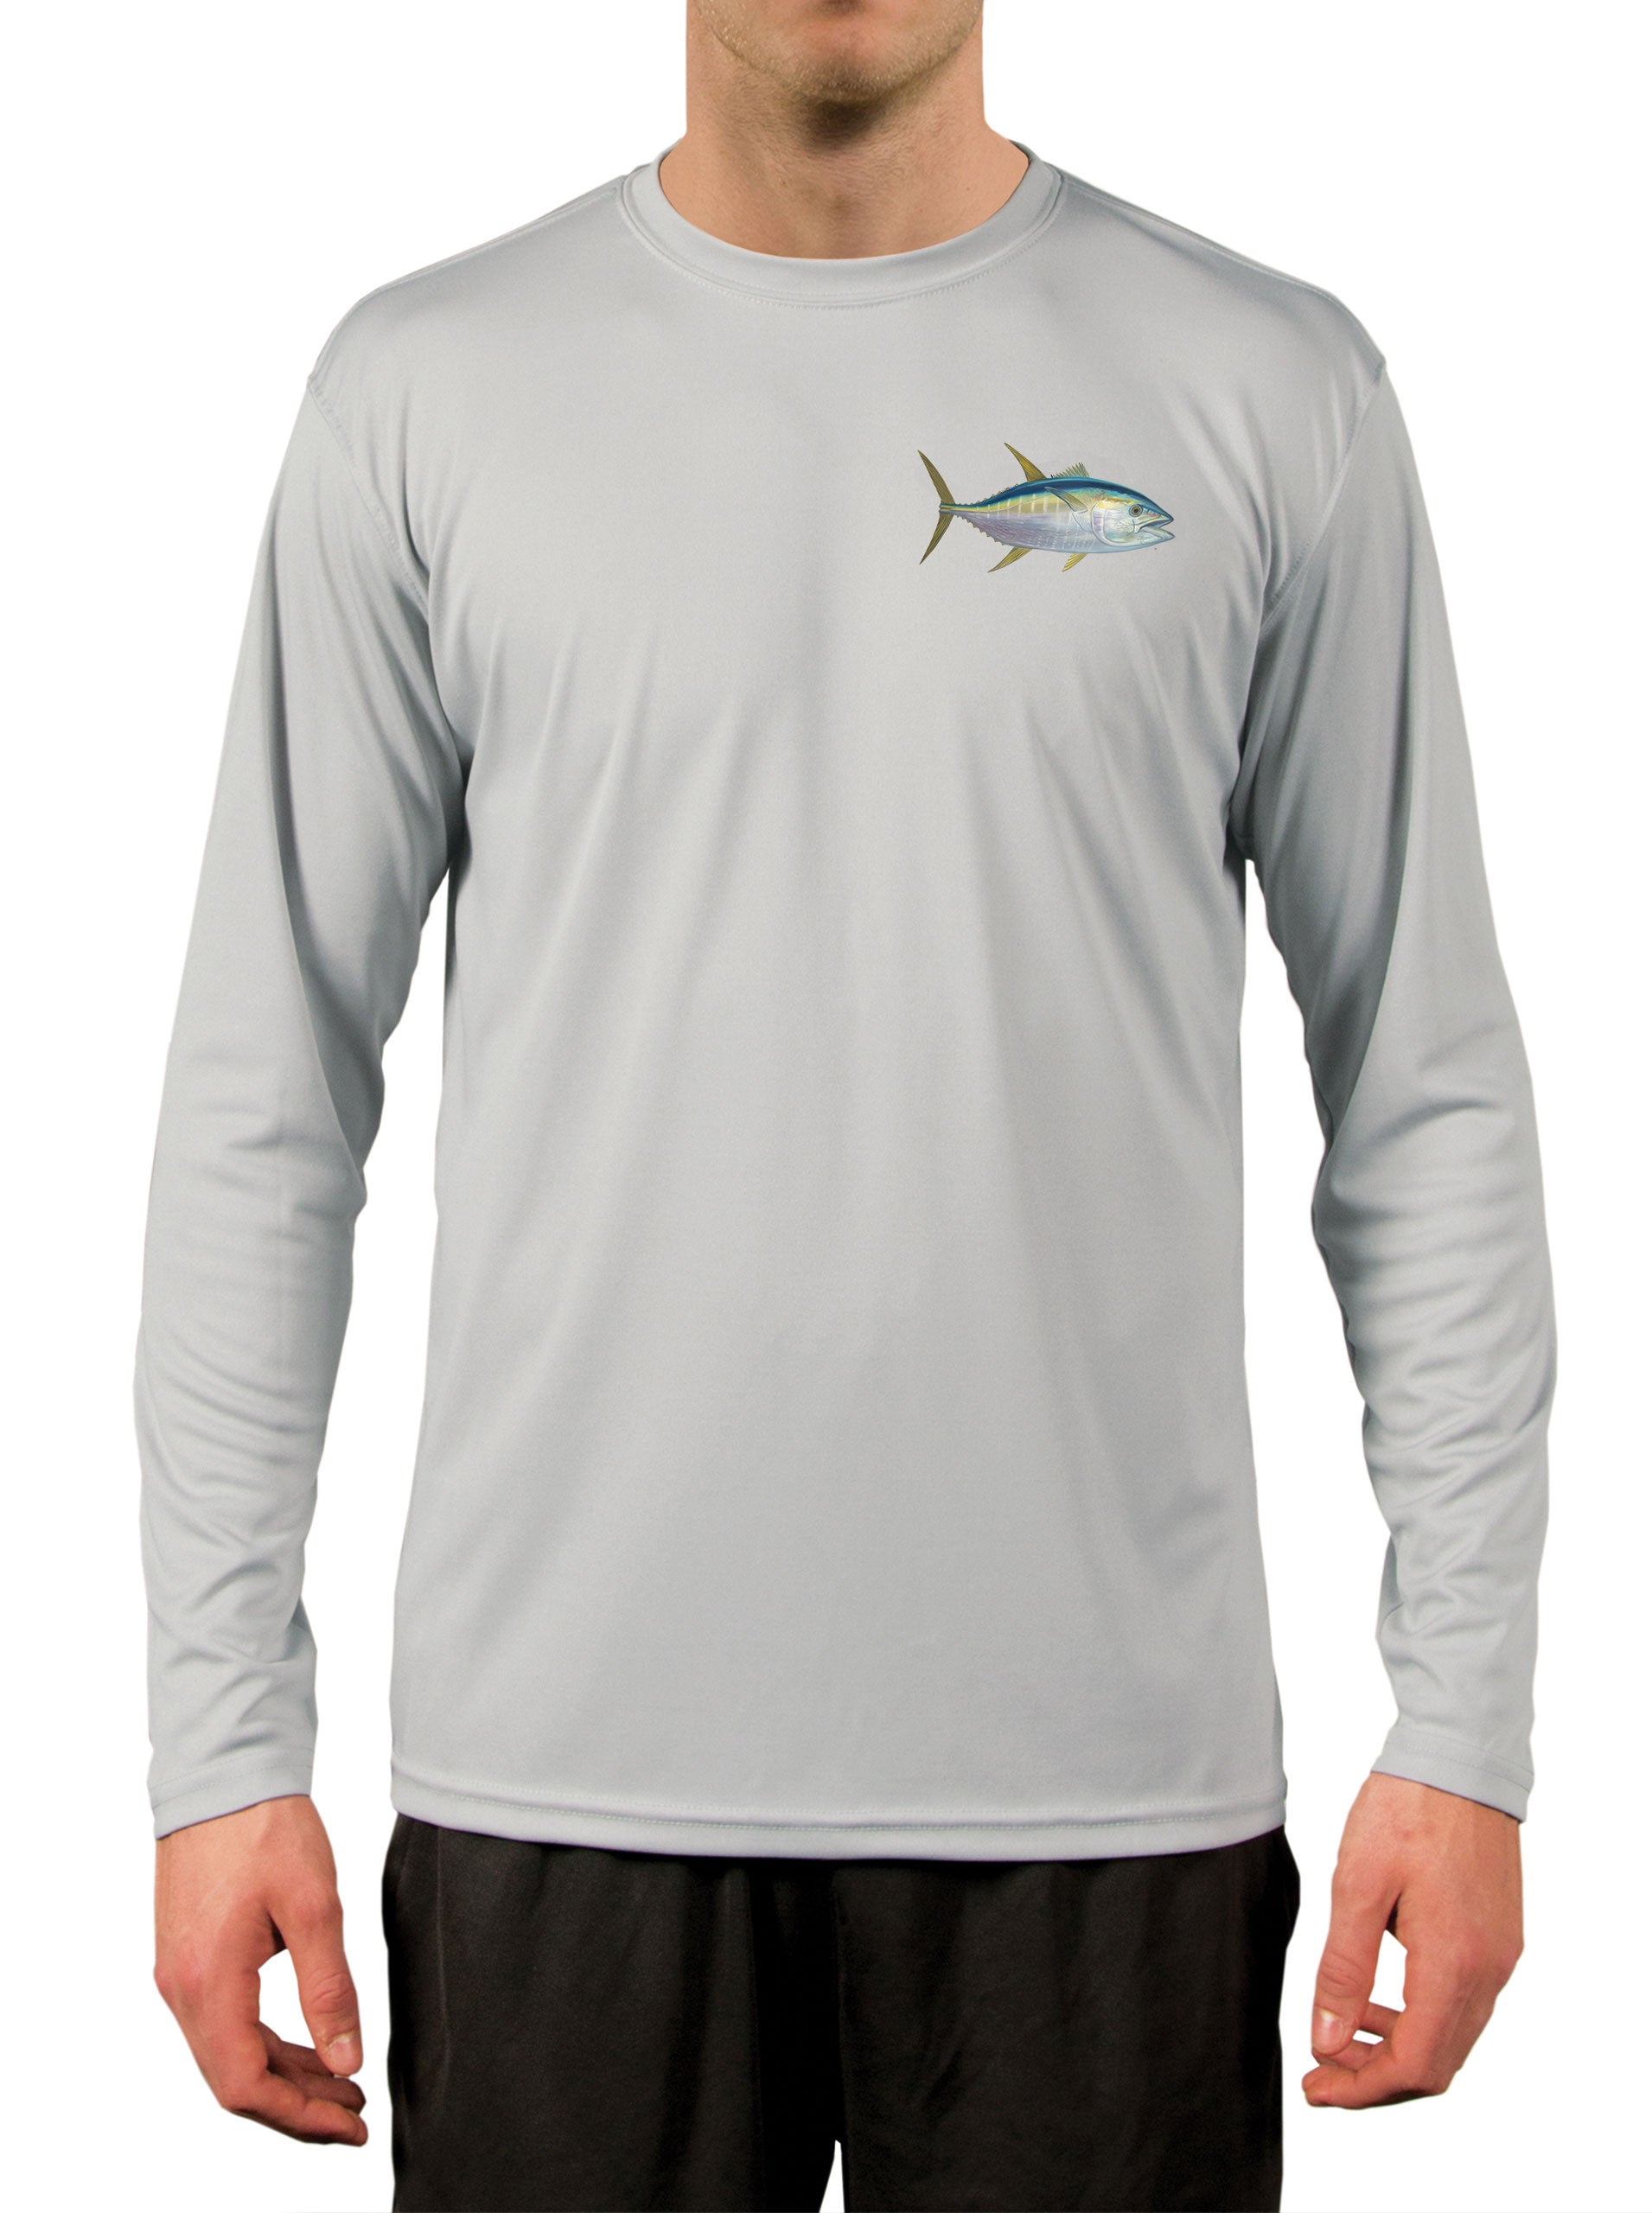 Wicked Tuna Fishing Shirts for Men Long Sleeve, Moisture Wicking 50+ UPF Fabric UV Protection Yellowfin Albacore Bluefin Tuna Fish Salt Water T-Shirt